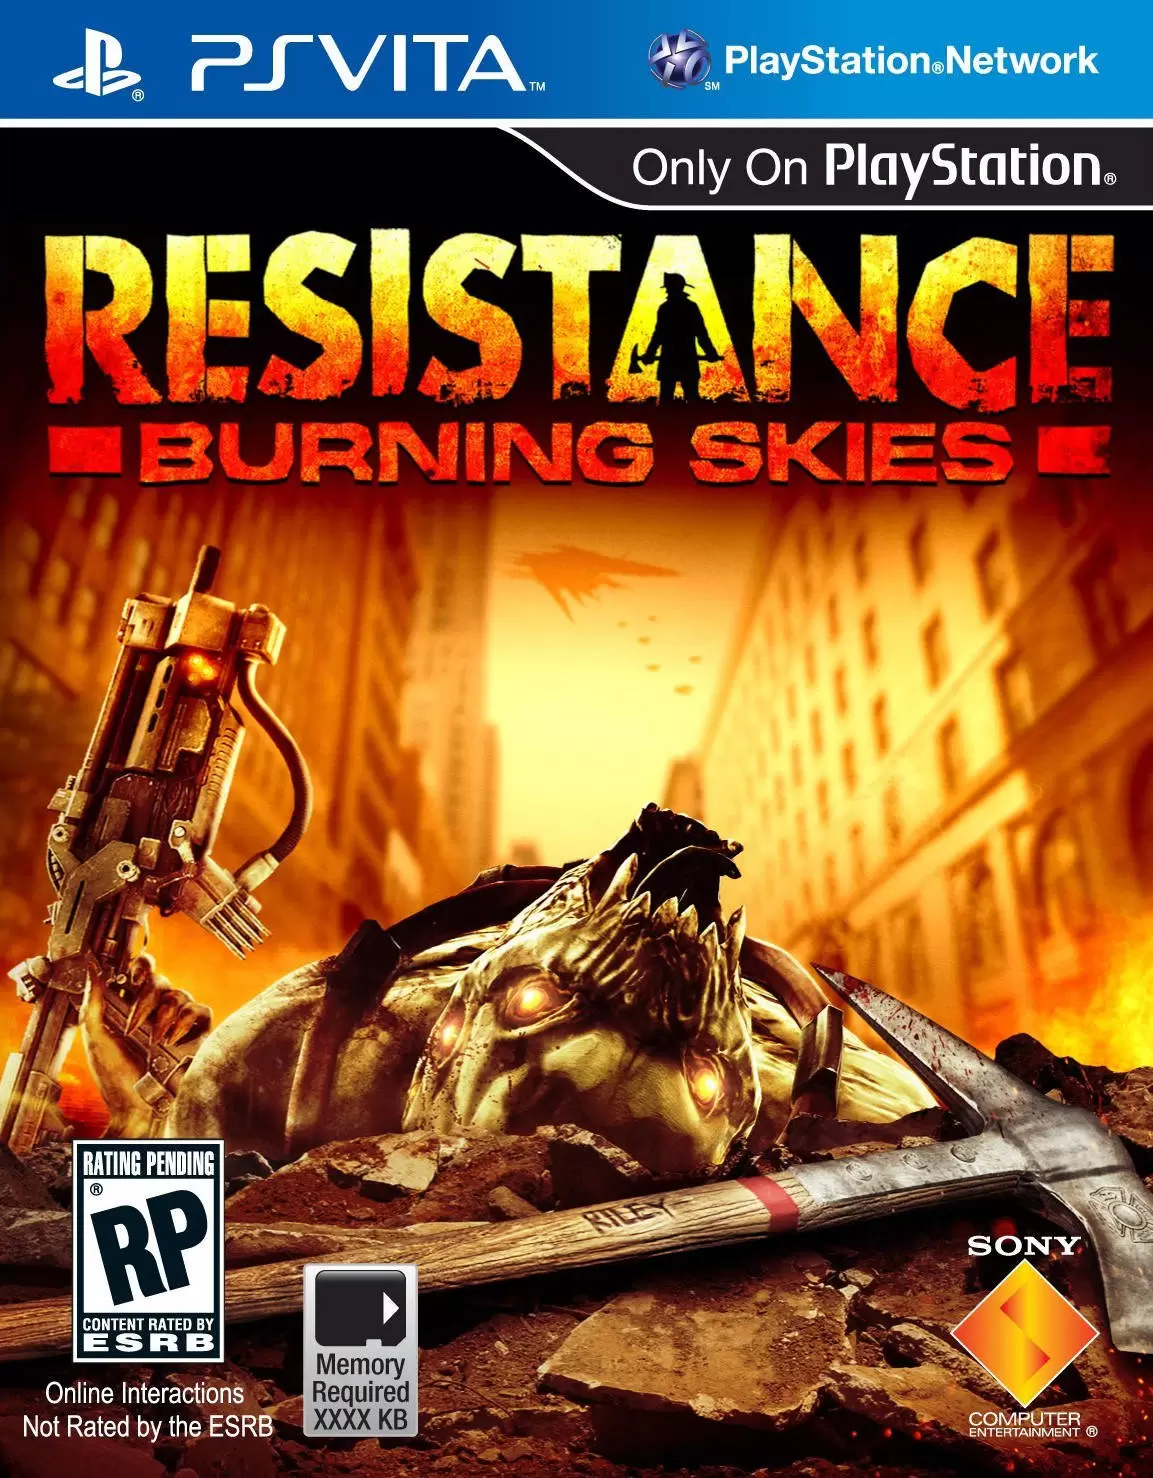 PS Vita Games - Resistance: Burning Skies